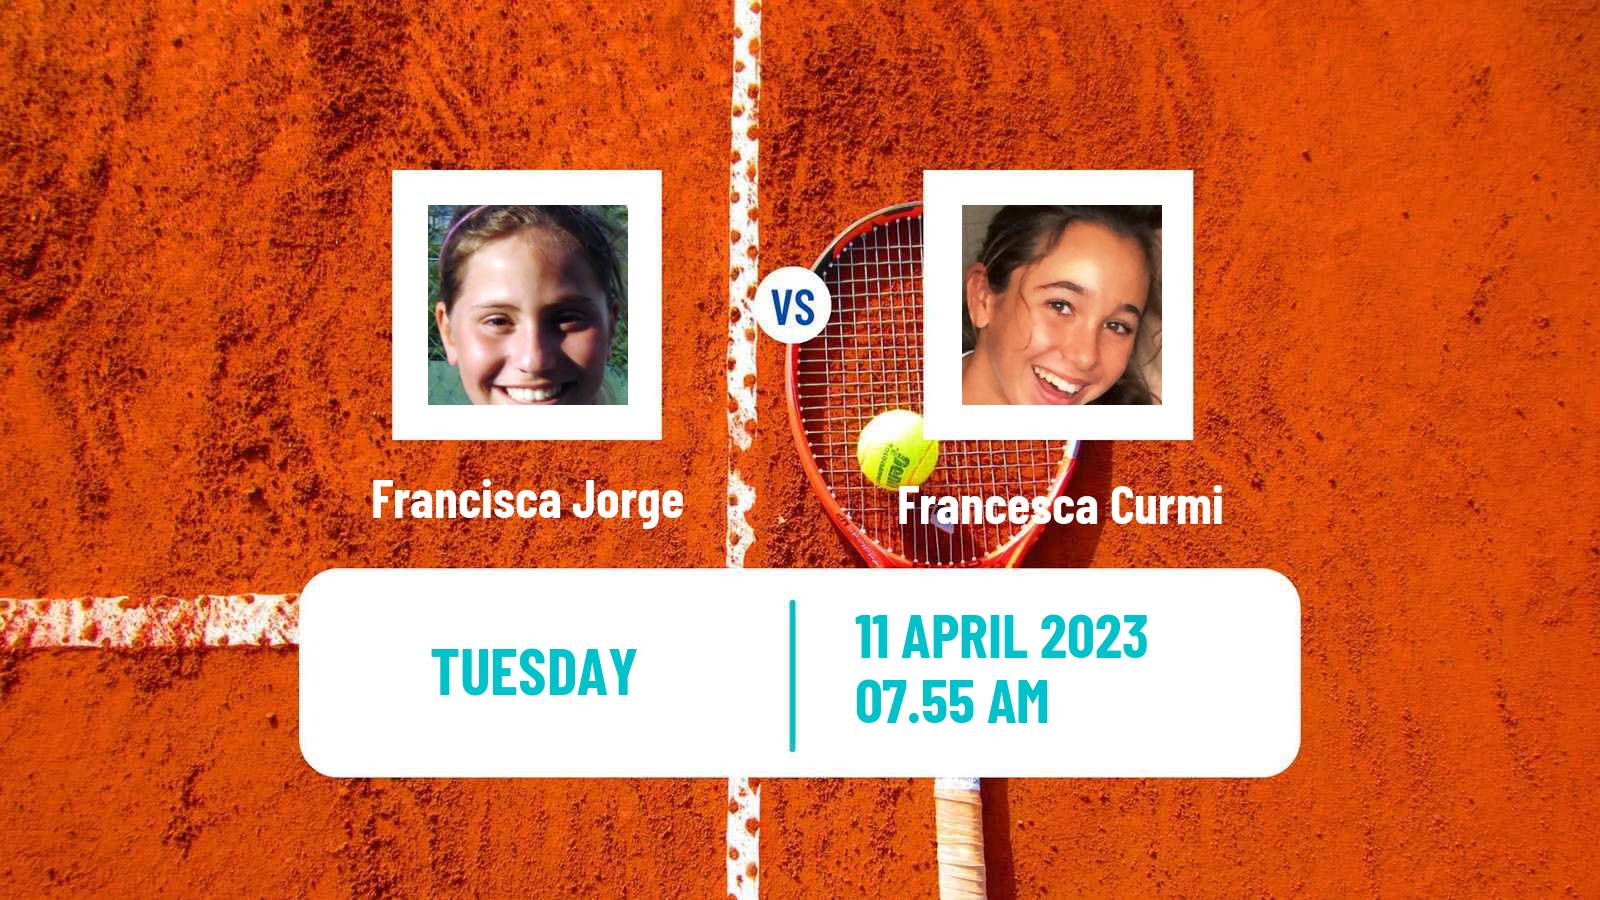 Tennis WTA Billie Jean King Cup Group II Francisca Jorge - Francesca Curmi